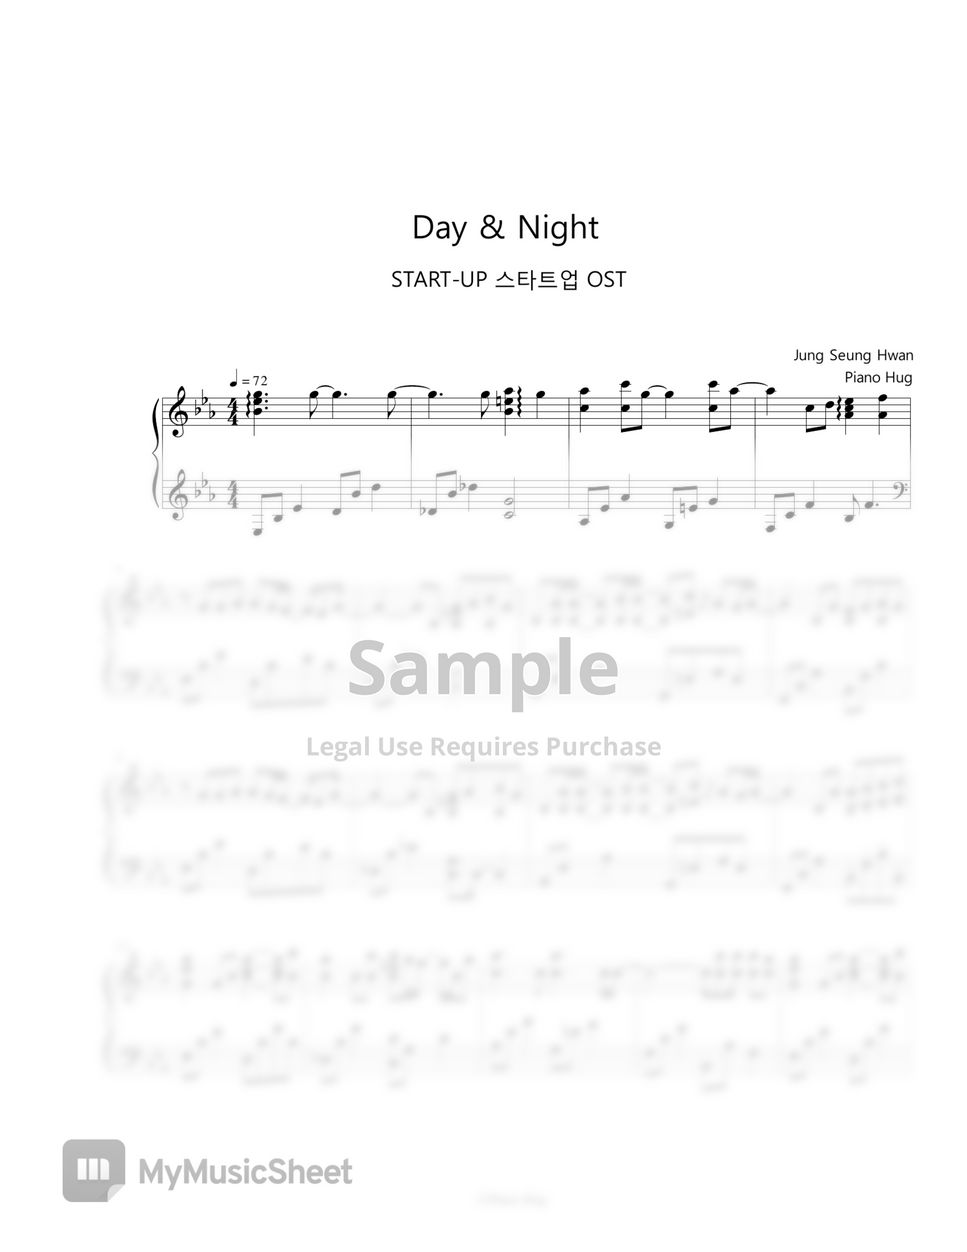 Jung Seung Hwan (정승환) - Day & Night (START UP 스타트업 OST) by Piano Hug